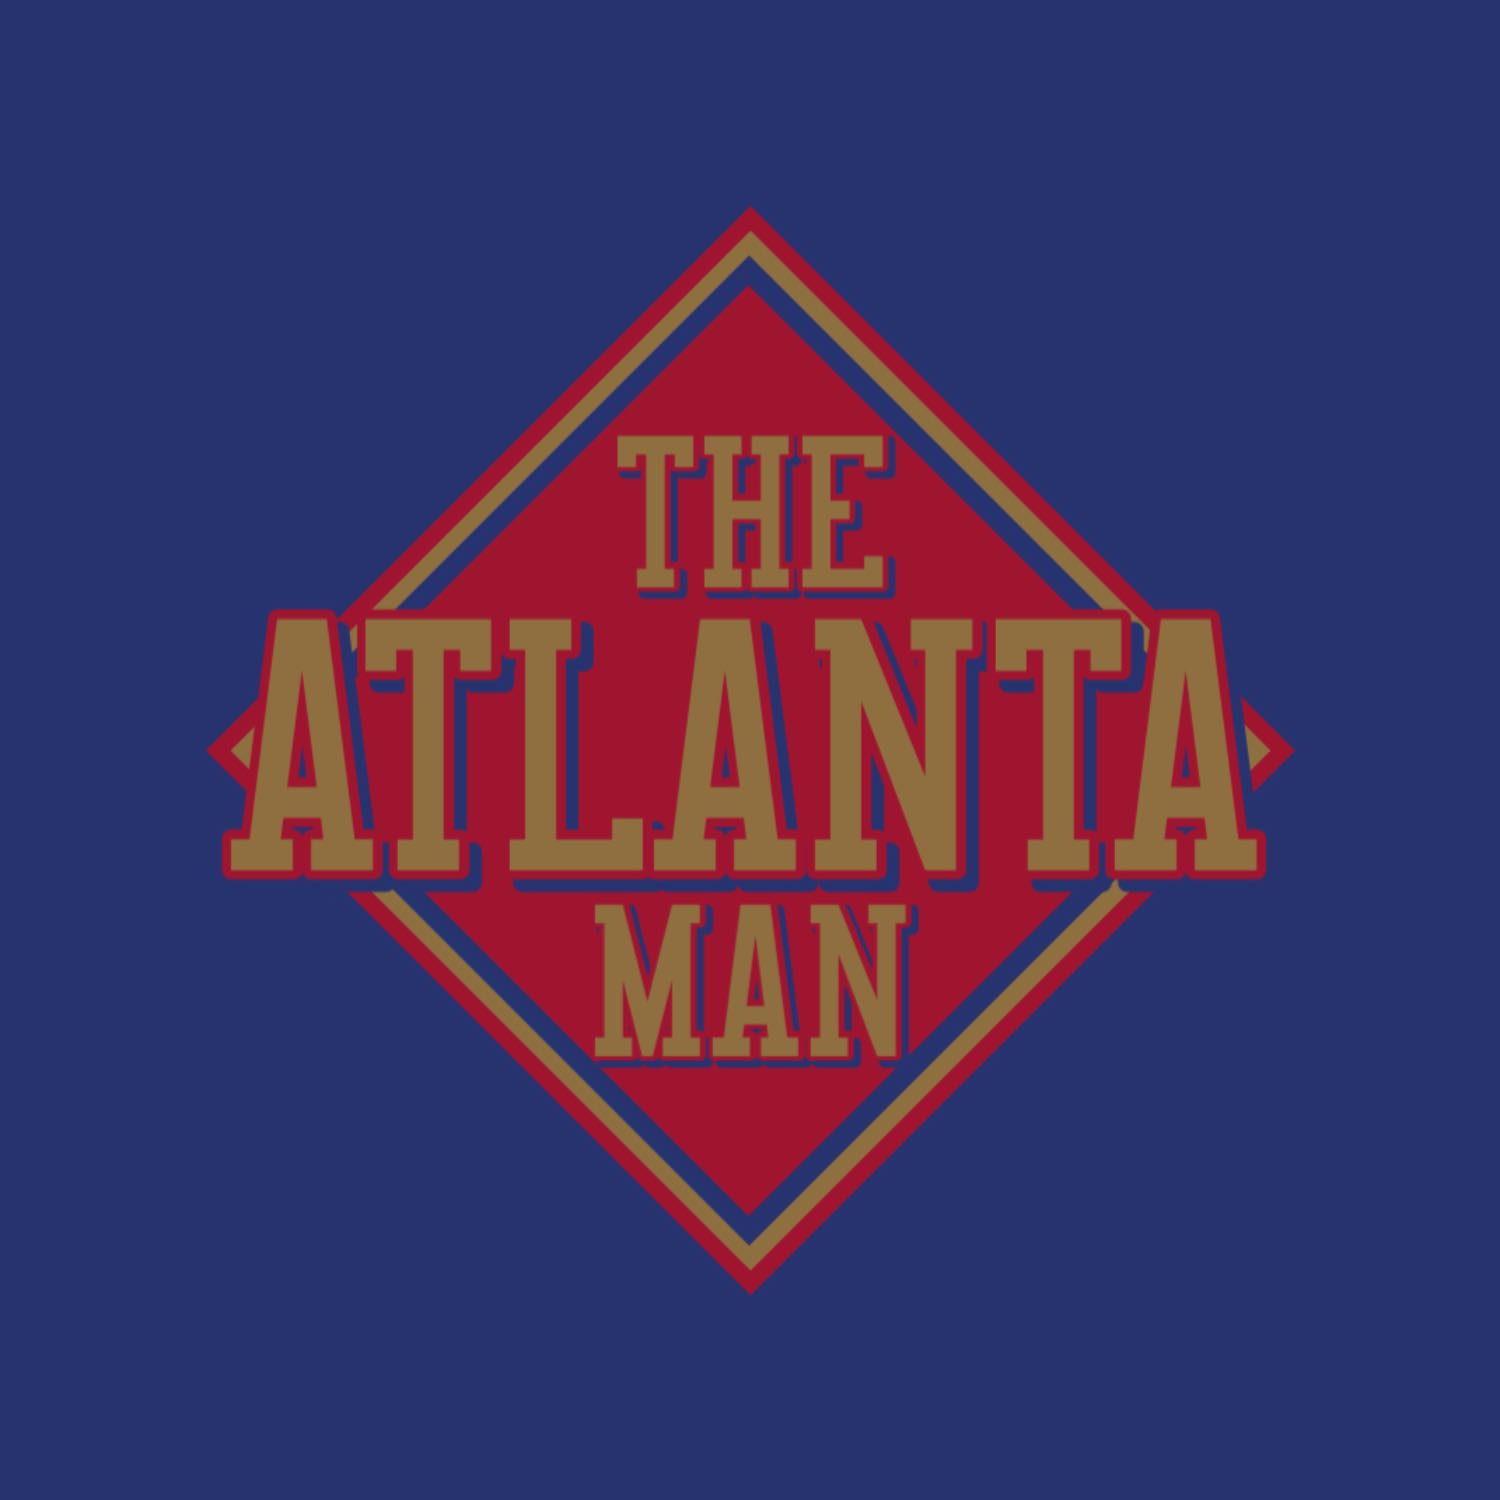 The Atlanta Man